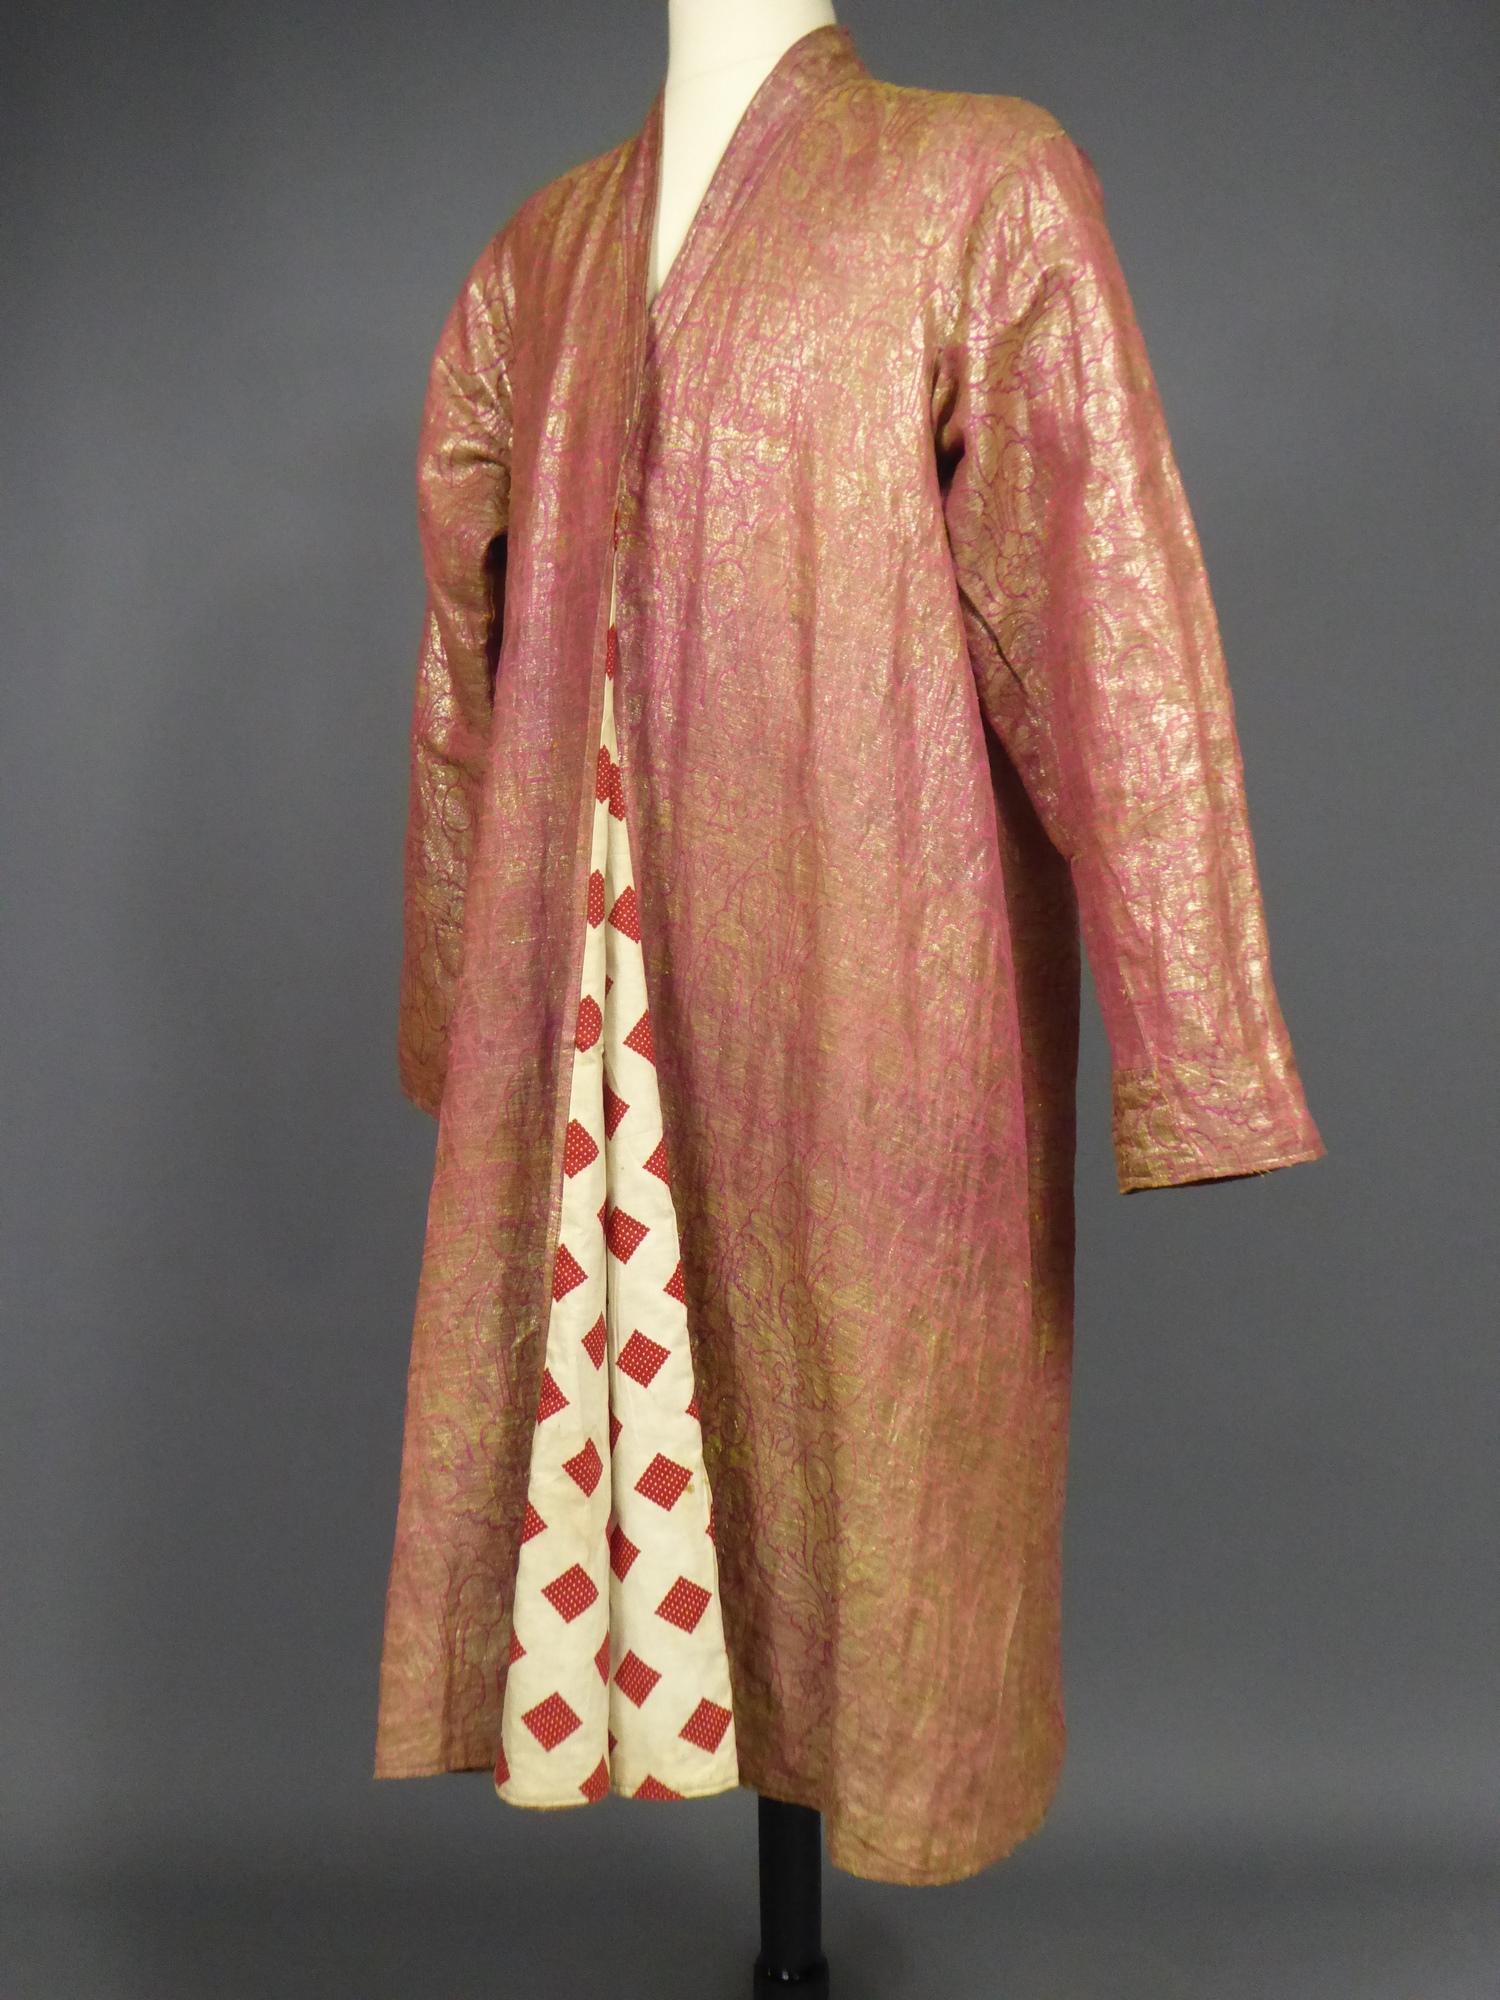 Brown Coat or Banyan in Gold Lamé and Russian Cotton Print - Uzbekistan Circa 1920